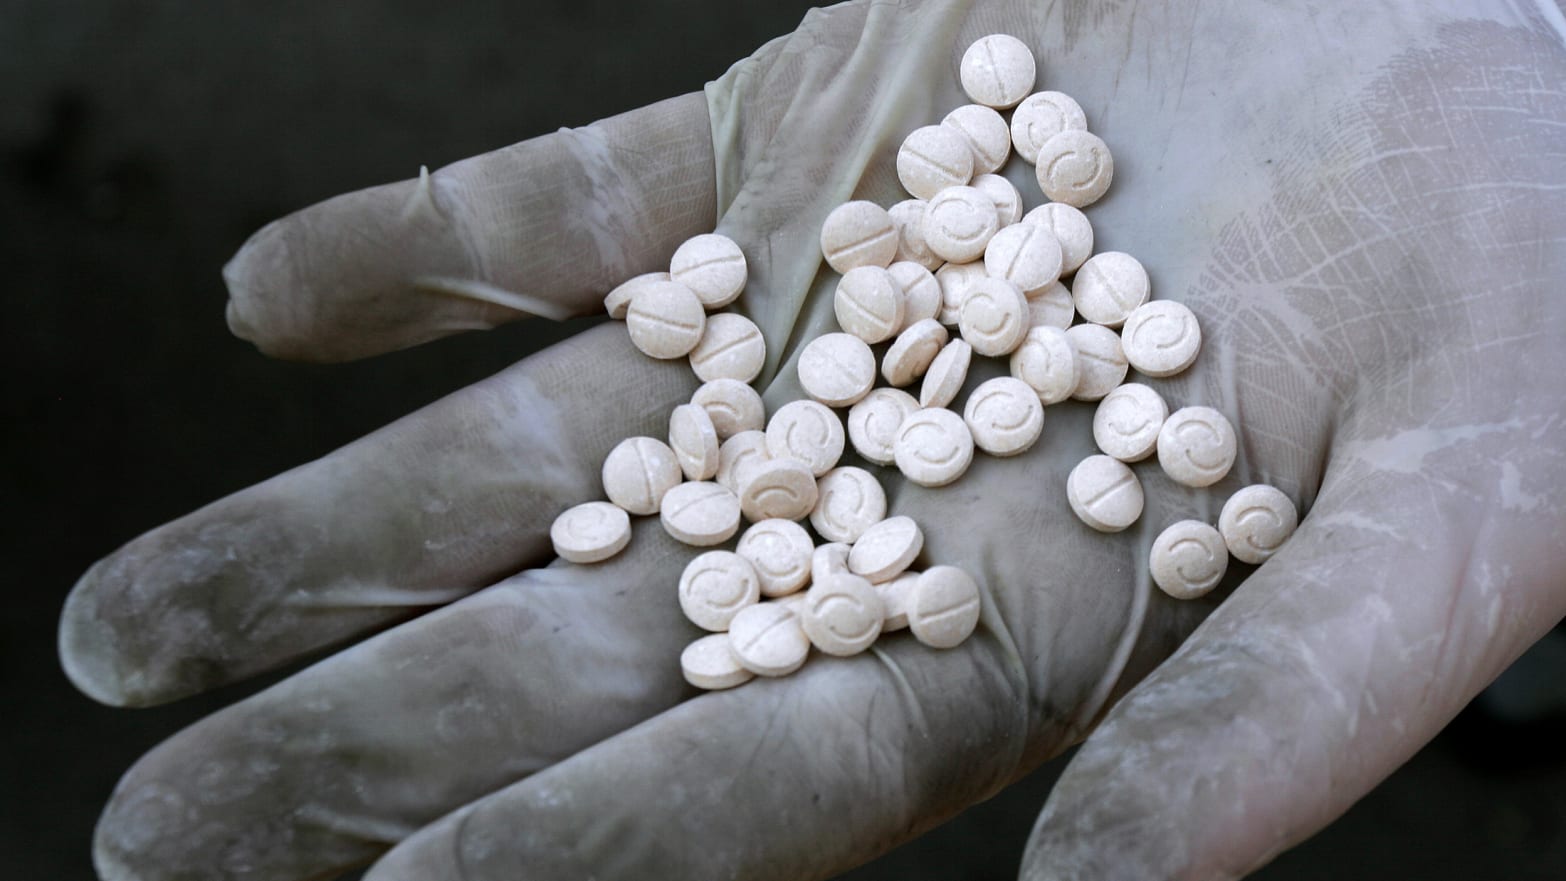 Turkish police seize fake COVID-19 pills